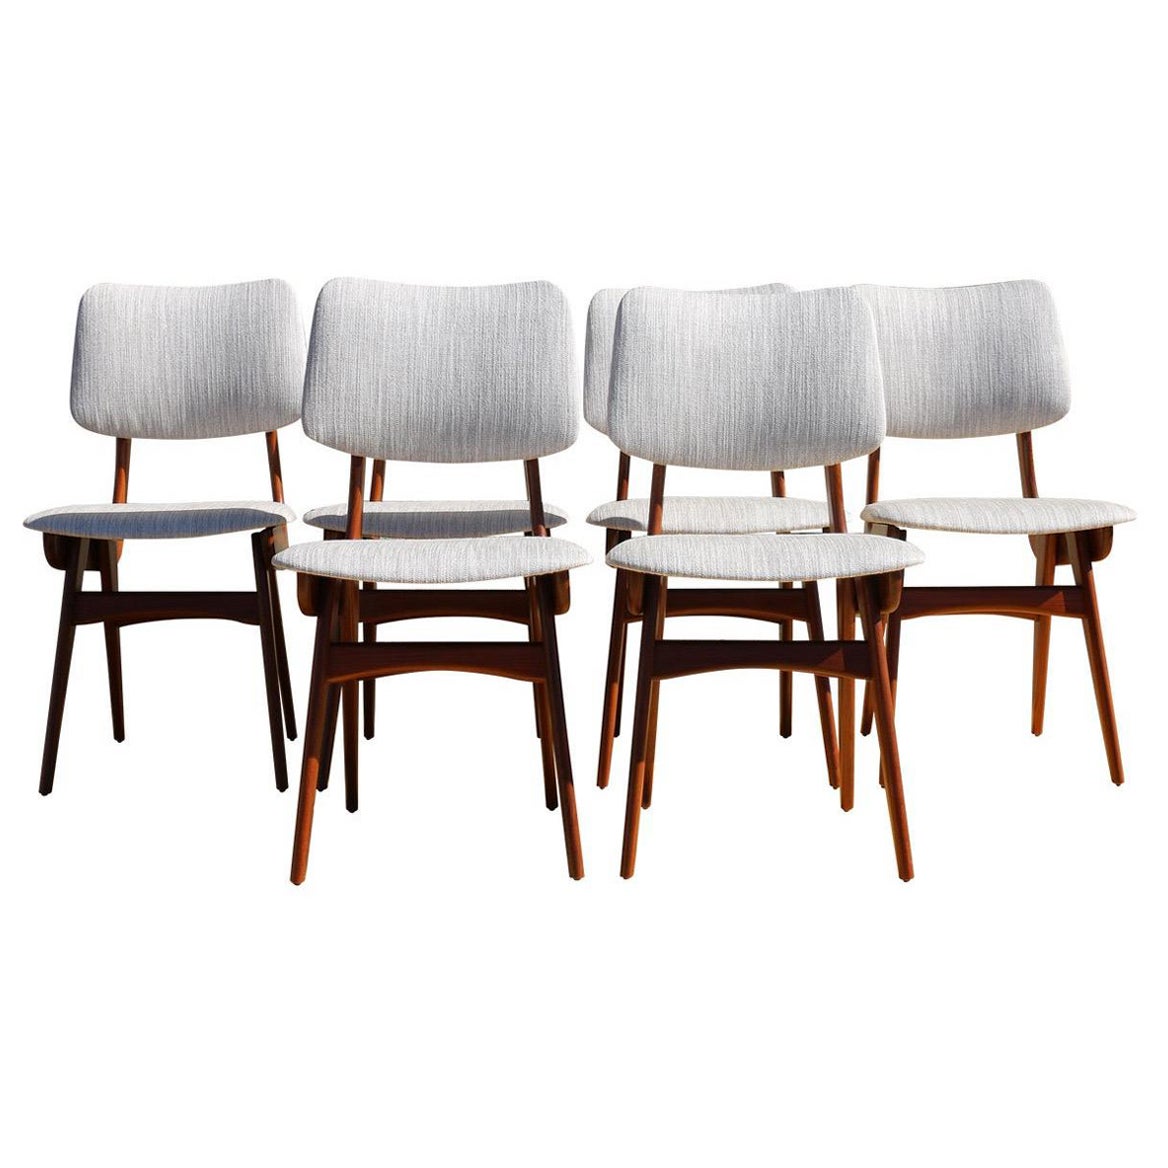 Set of Six Mid Century Modern Dining Chairs by Louis Van Teeffelen for Wébé